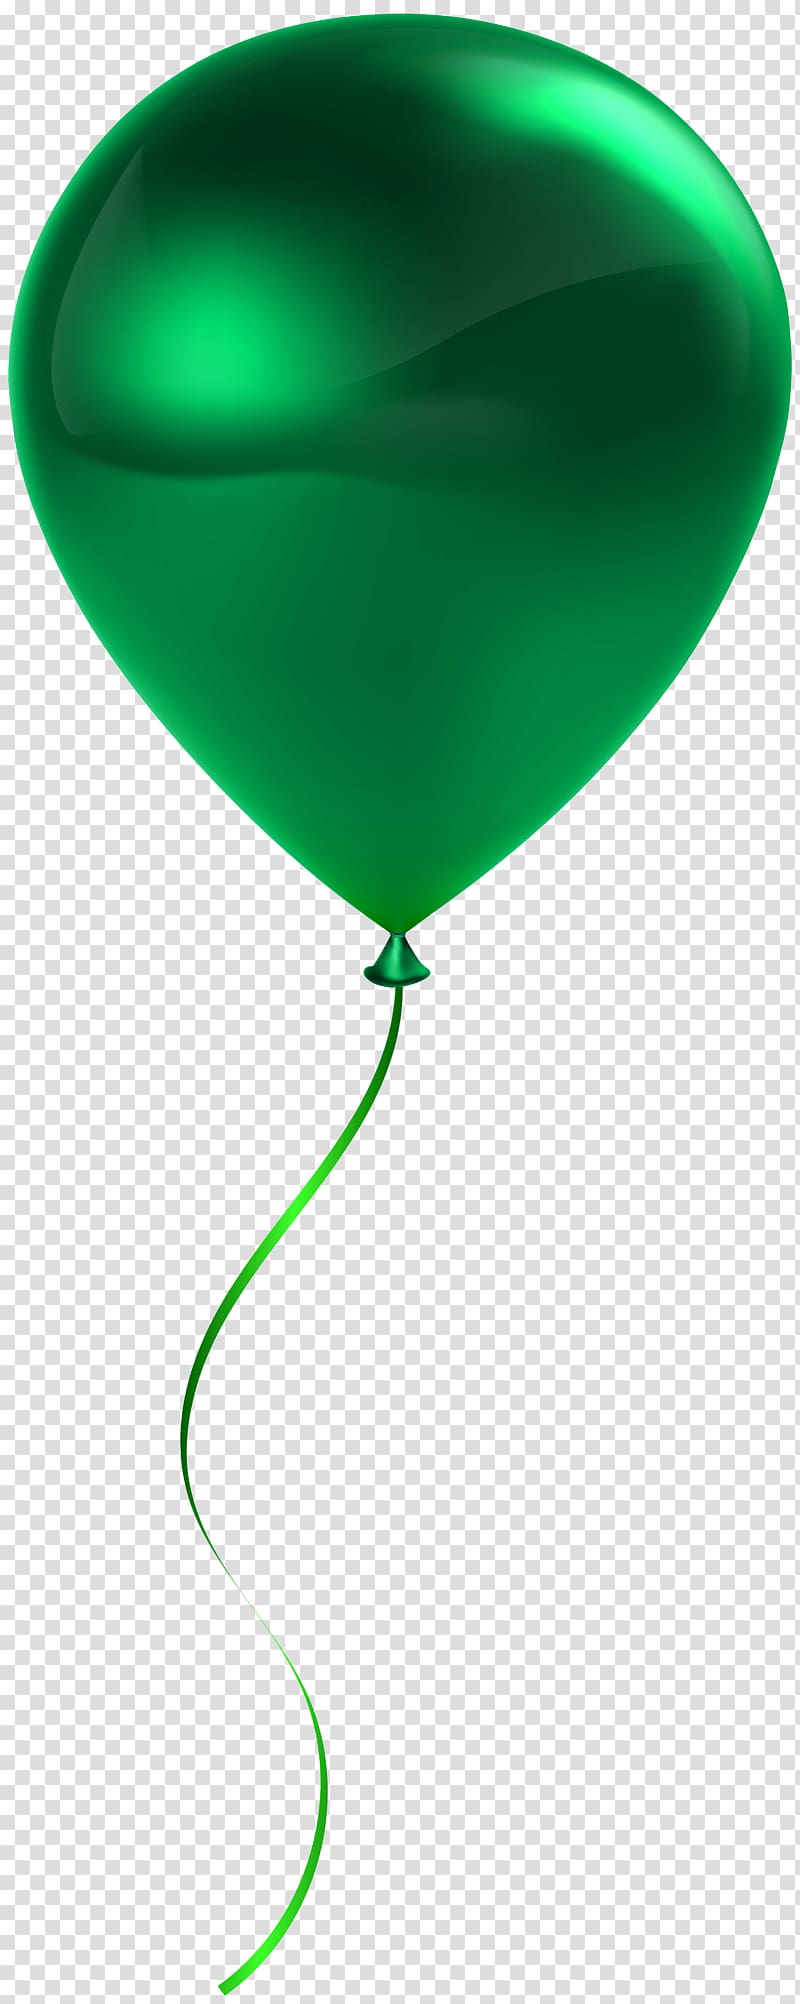 green balloon illustration, Albuquerque International Balloon Fiesta Anderson-Abruzzo Albuquerque International Balloon Museum 2016 Lockhart hot air balloon crash Gas balloon, Single Green Balloon transparent background PNG clipart